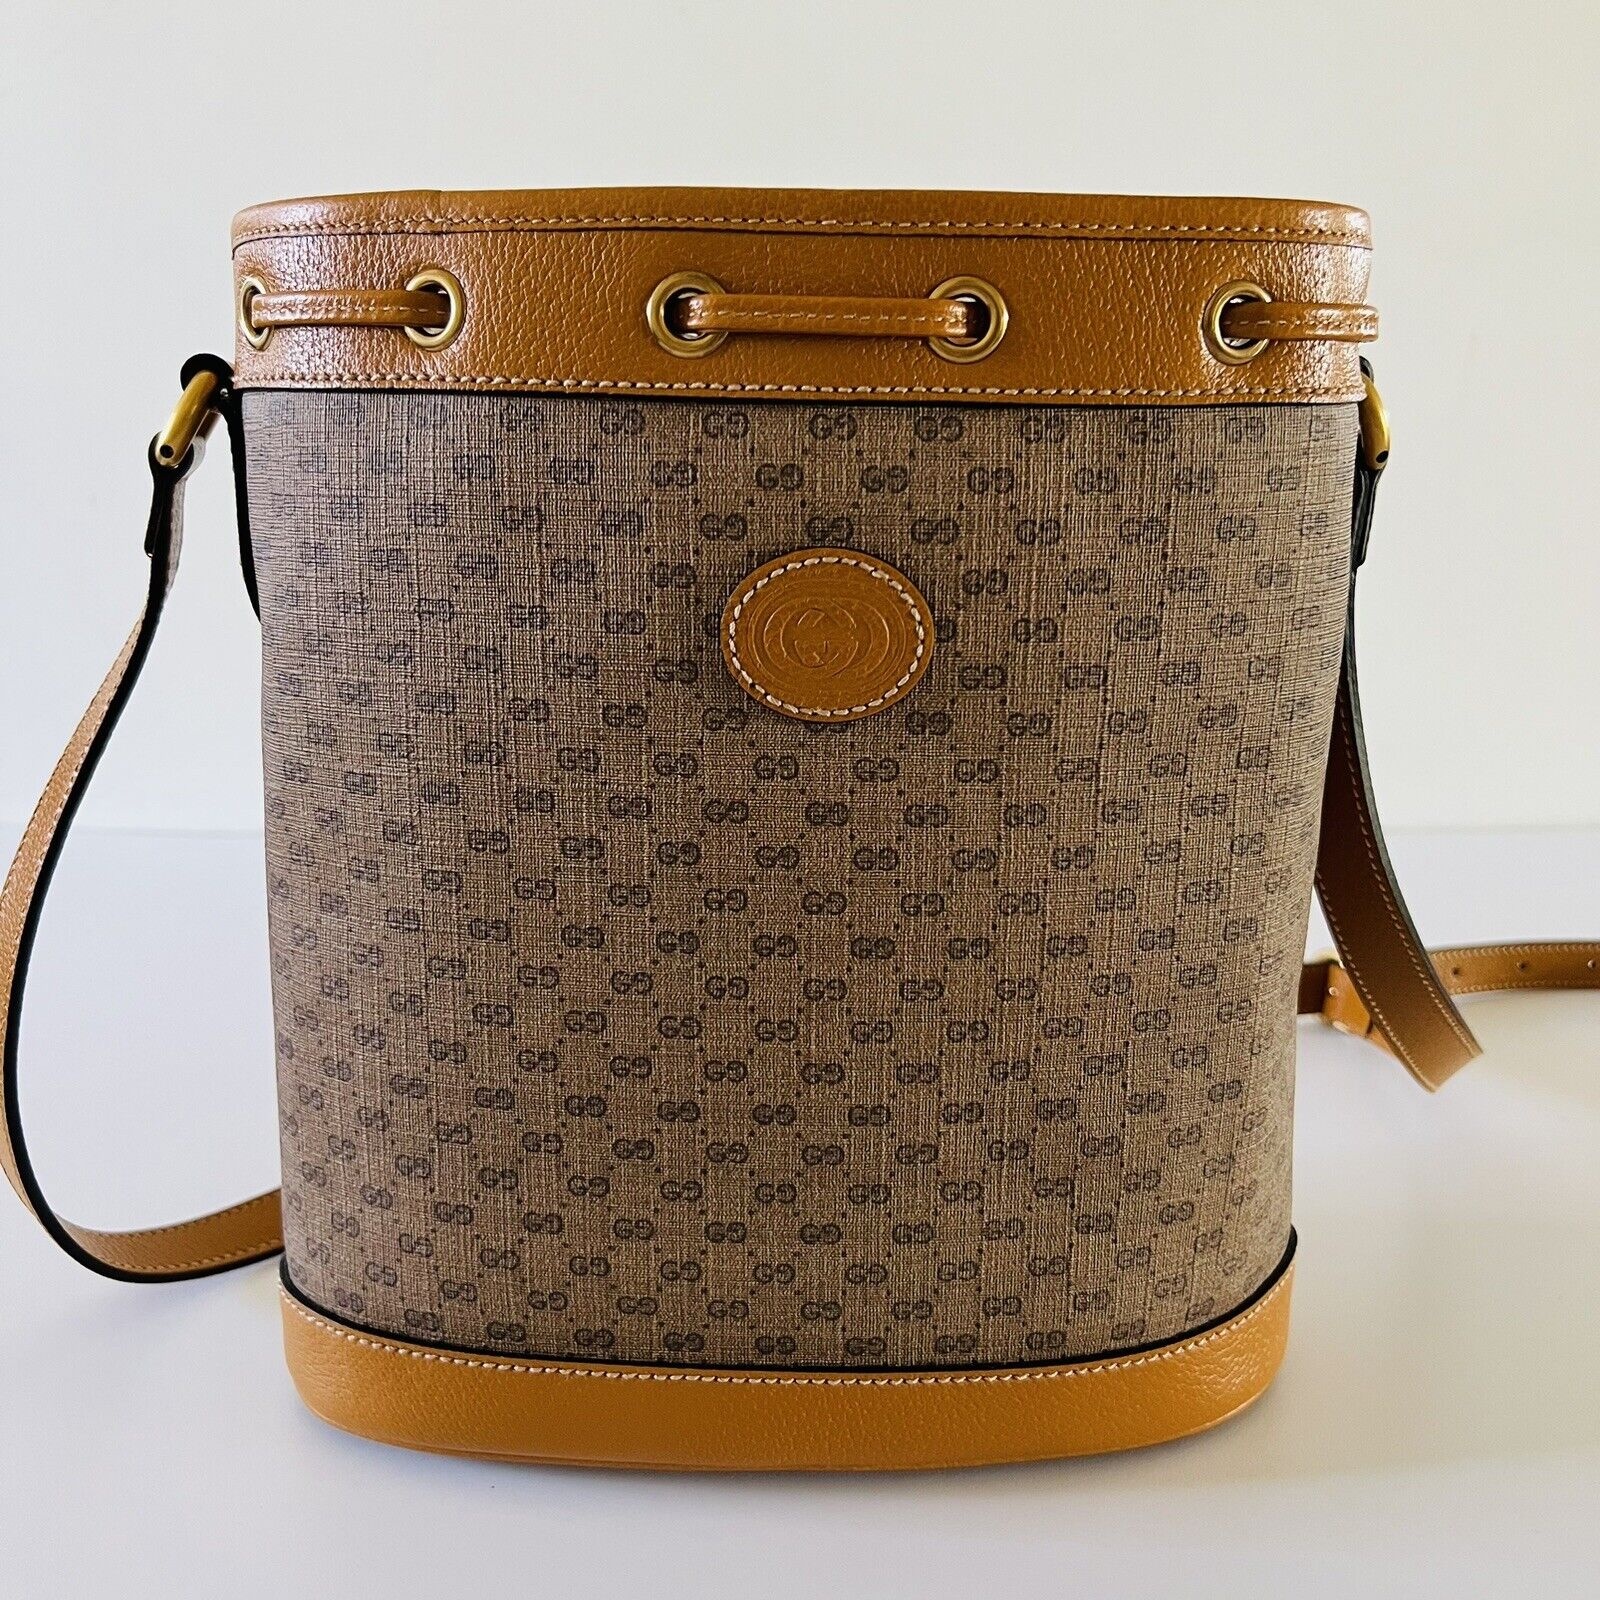 Gucci x Disney Bucket Bag Mickey Mouse Shoulder Bag